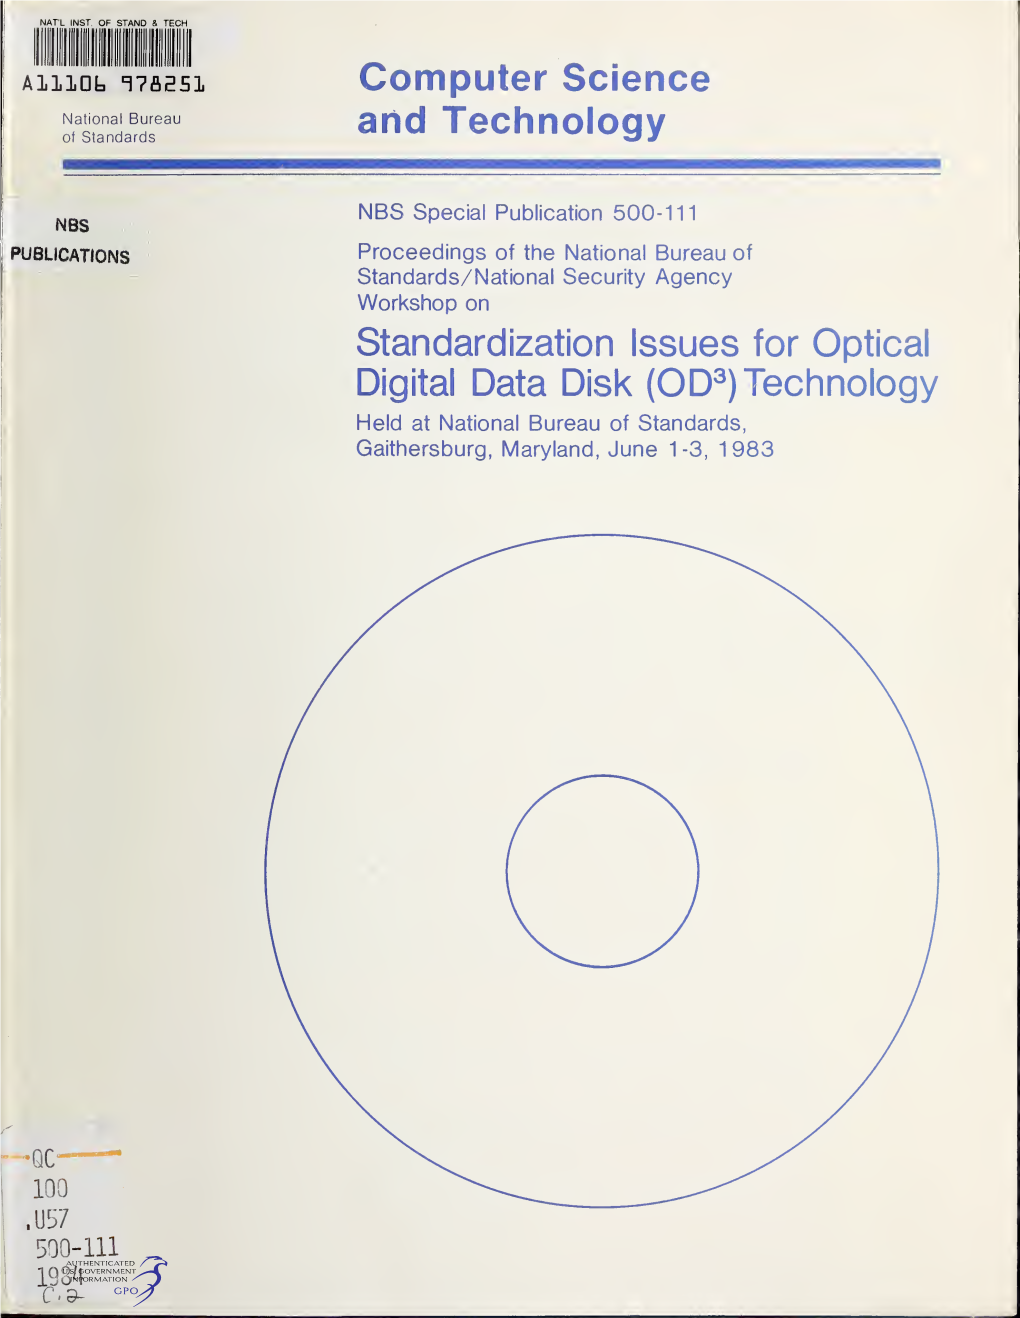 Standardization Issues for Optical Digital Data Disk (OD3